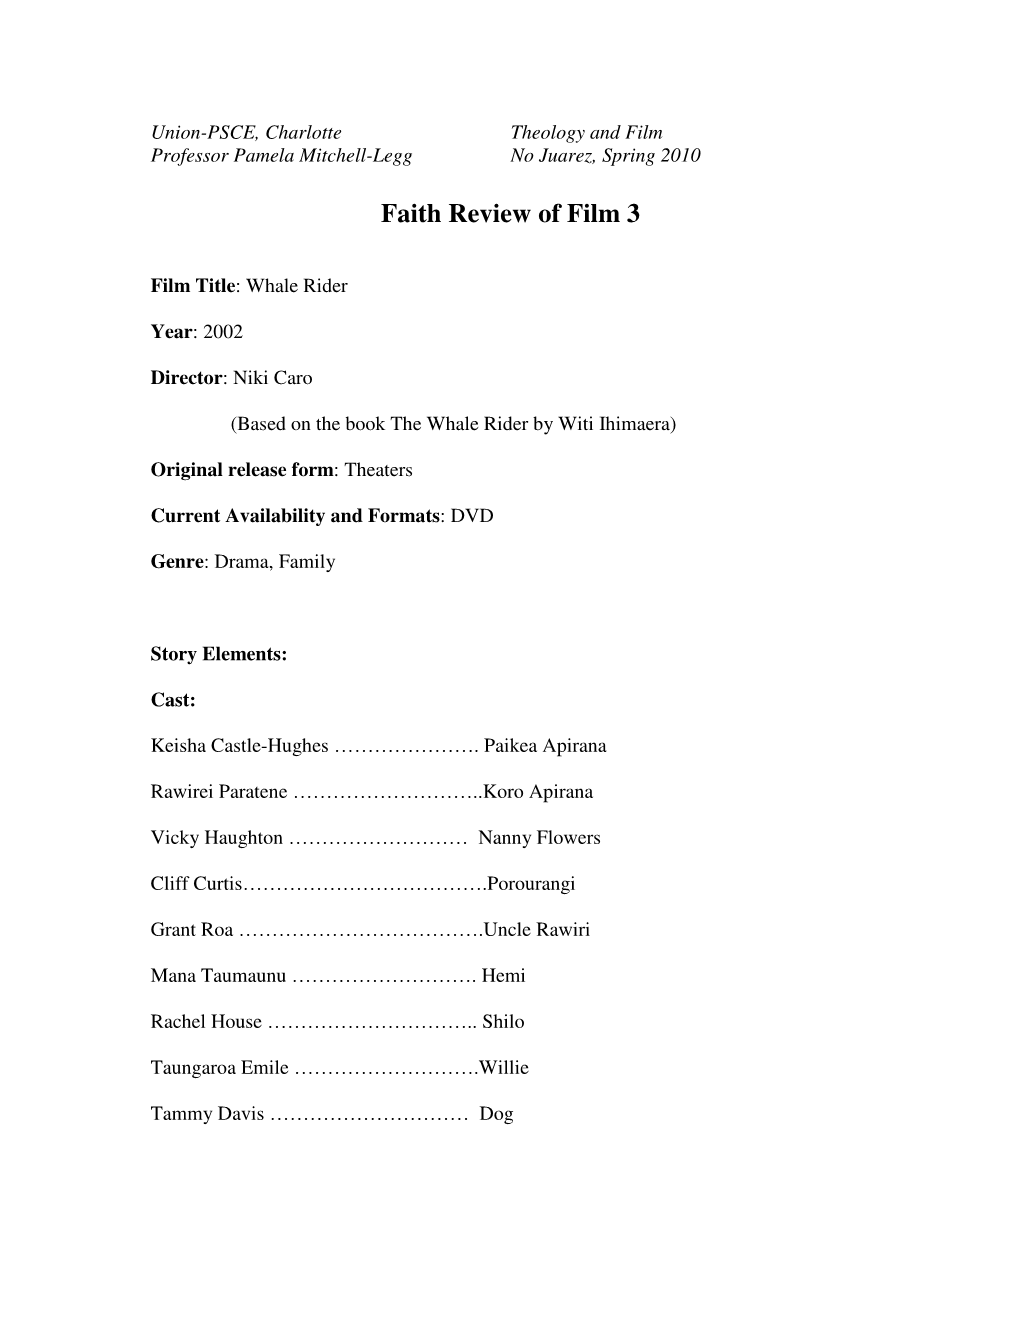 Faith Review of Film 3